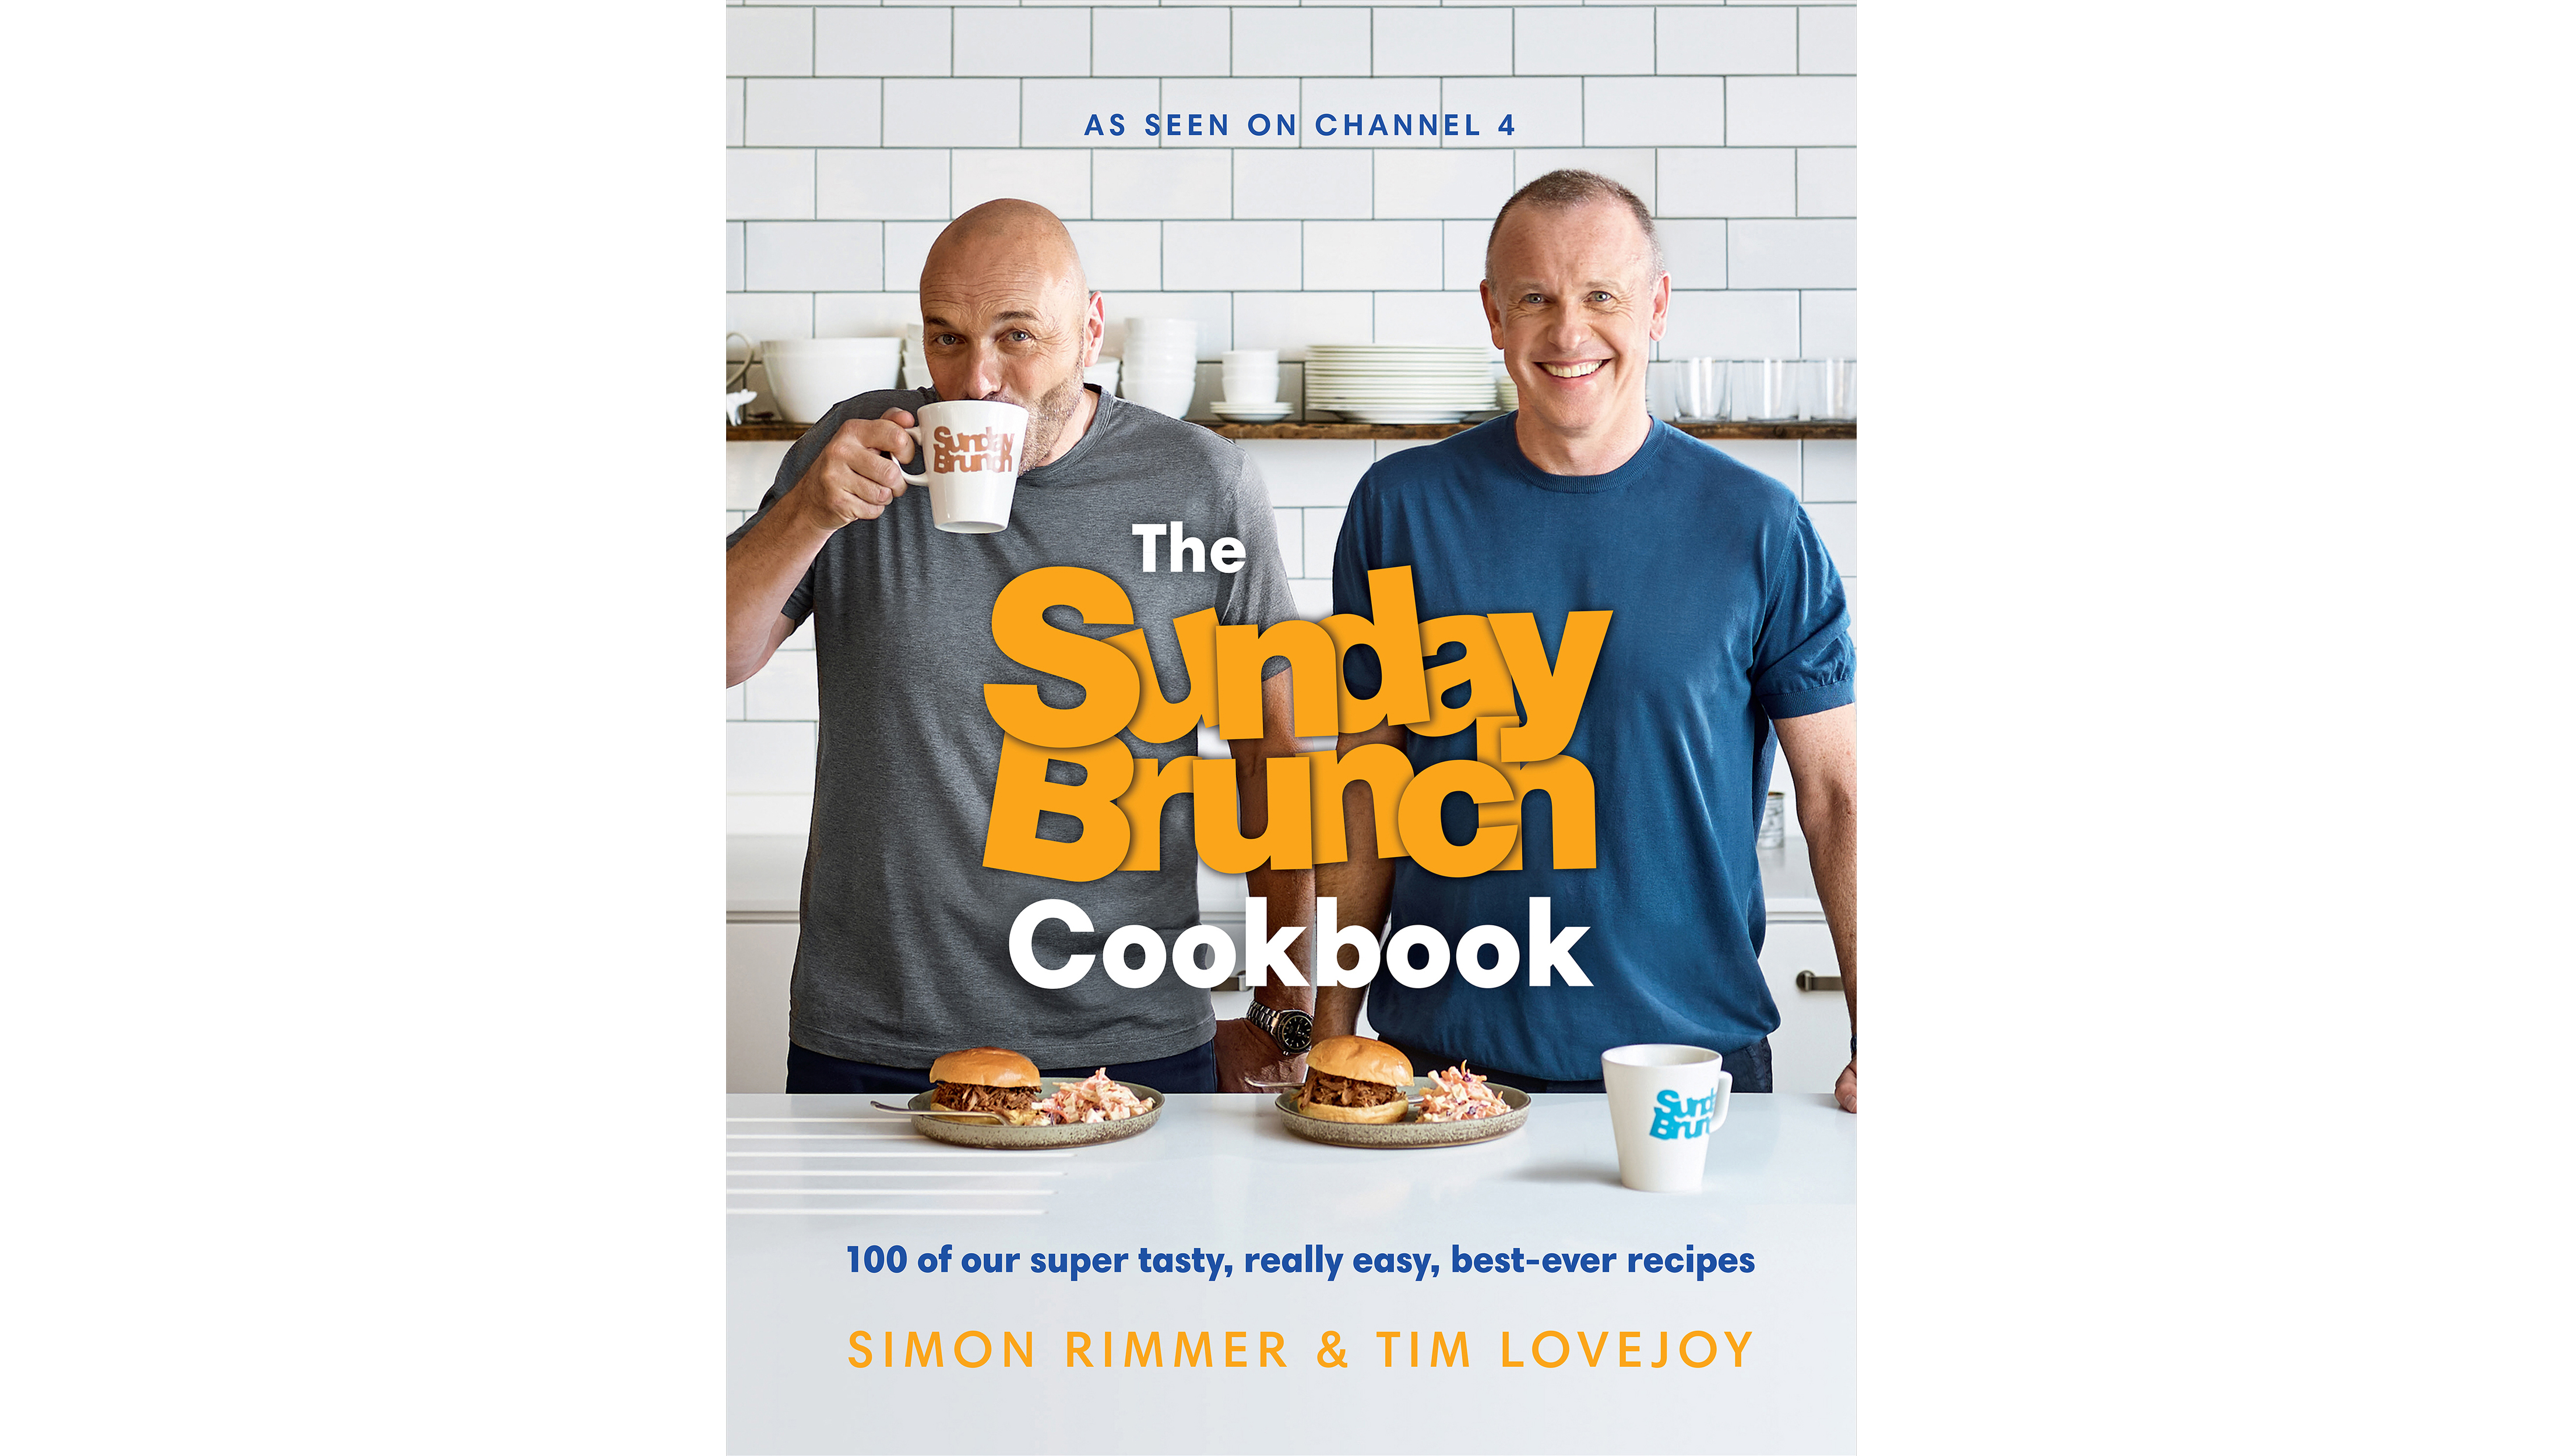 The Sunday Brunch Cookbook by Simon Rimmer and Tim Lovejoy (Dan Jones/PA)